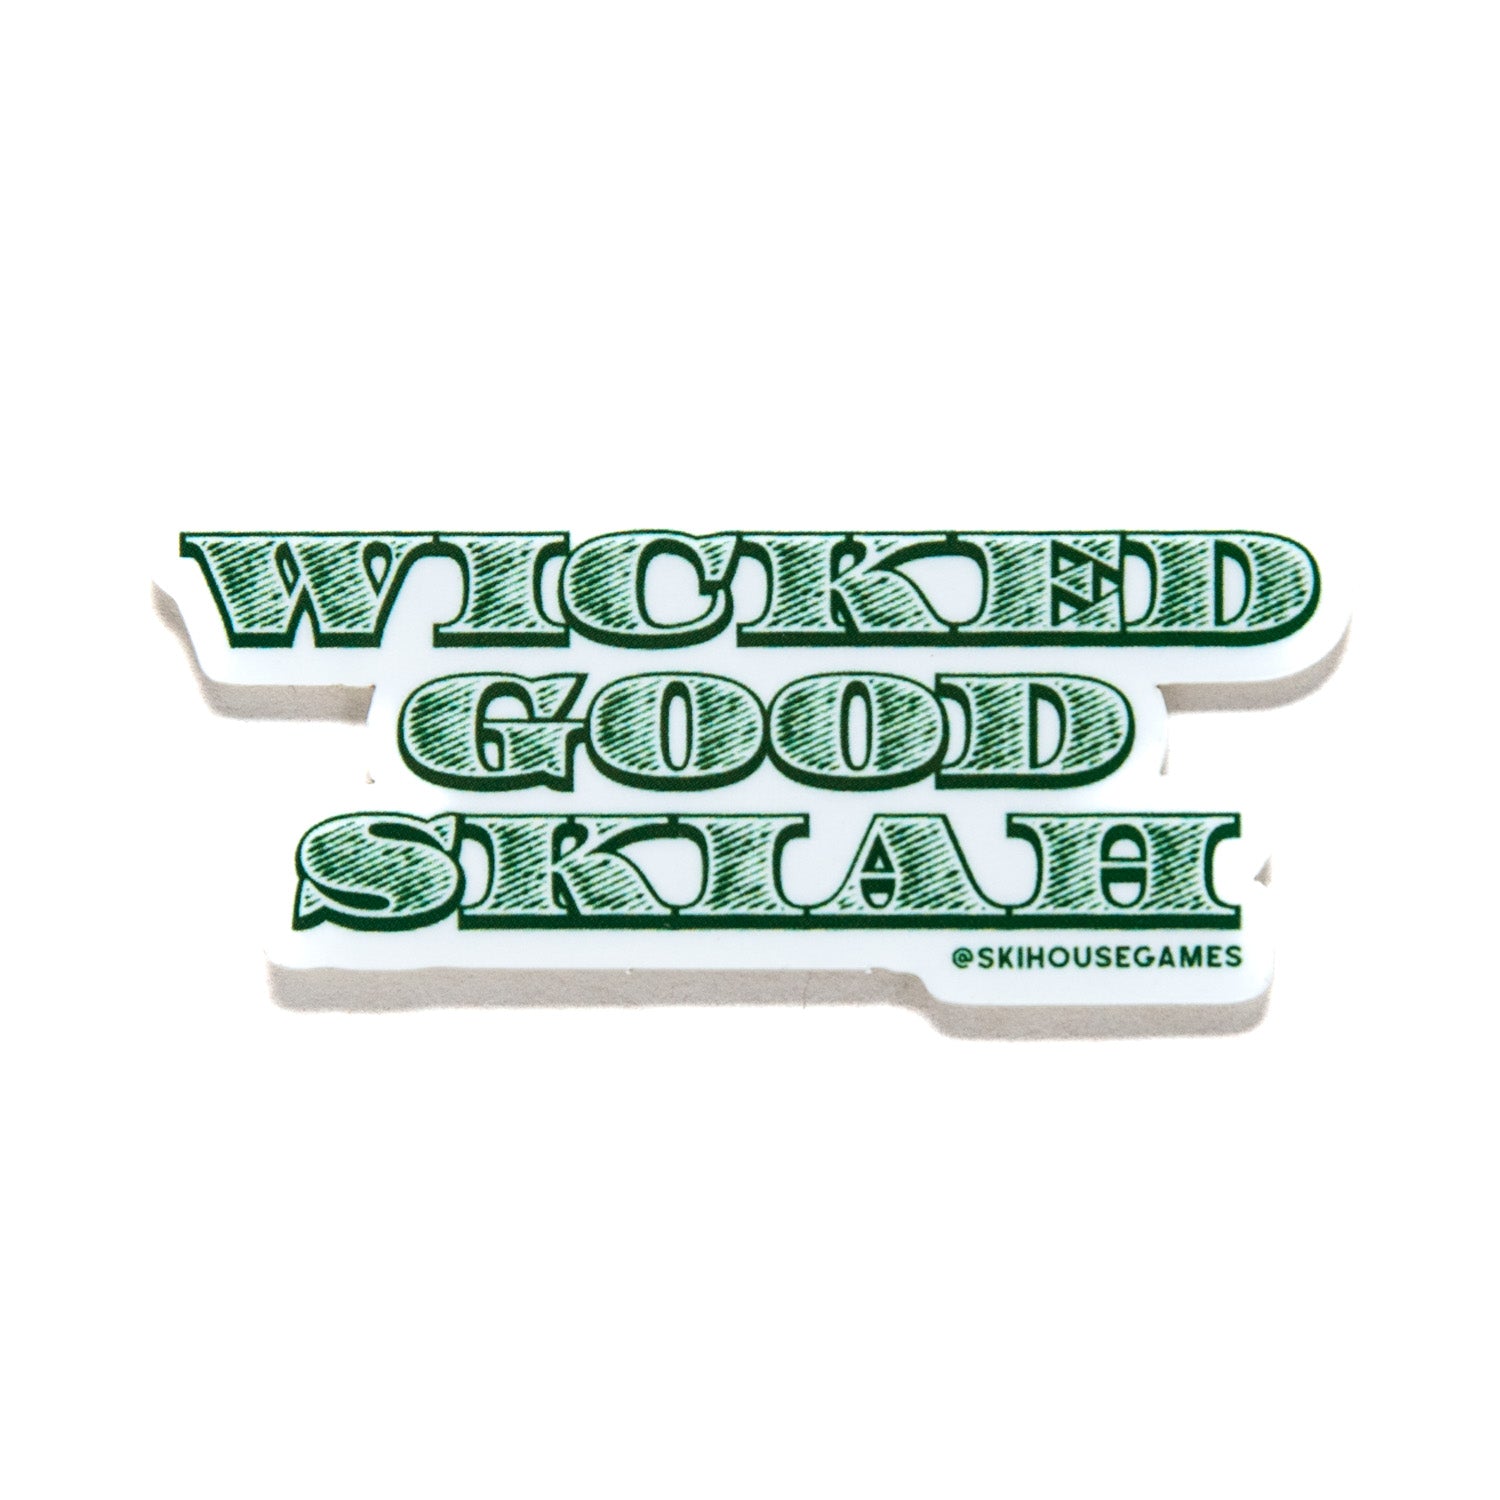 Wicked Good Skiah Holographic Sticker